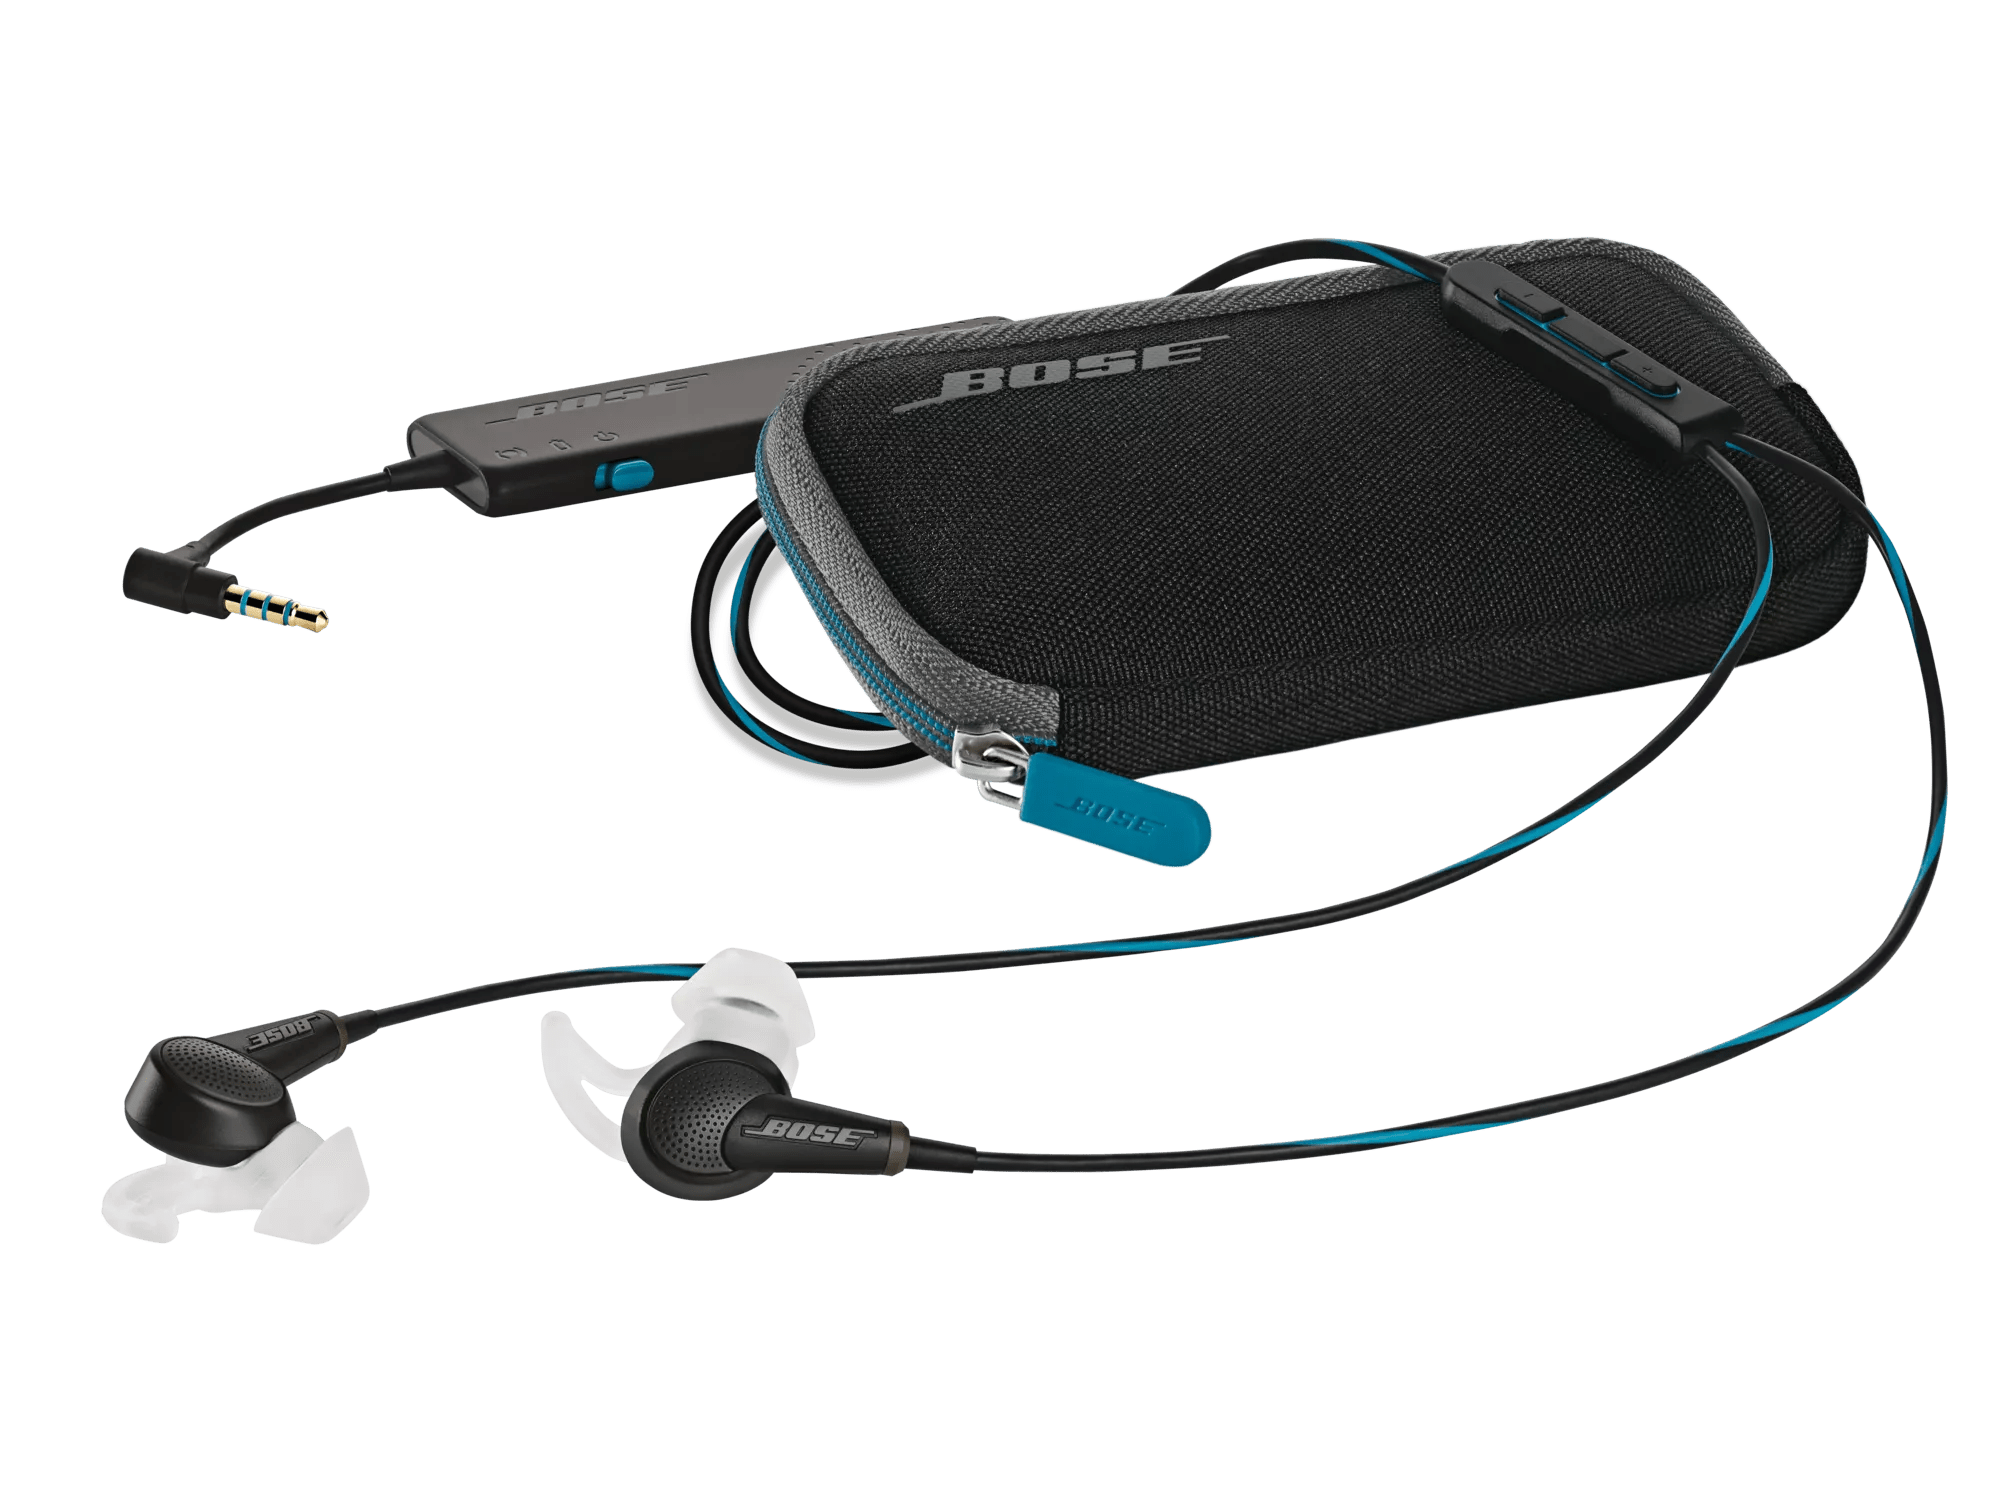 Bose QuietComfort 20 headphones and carrying case